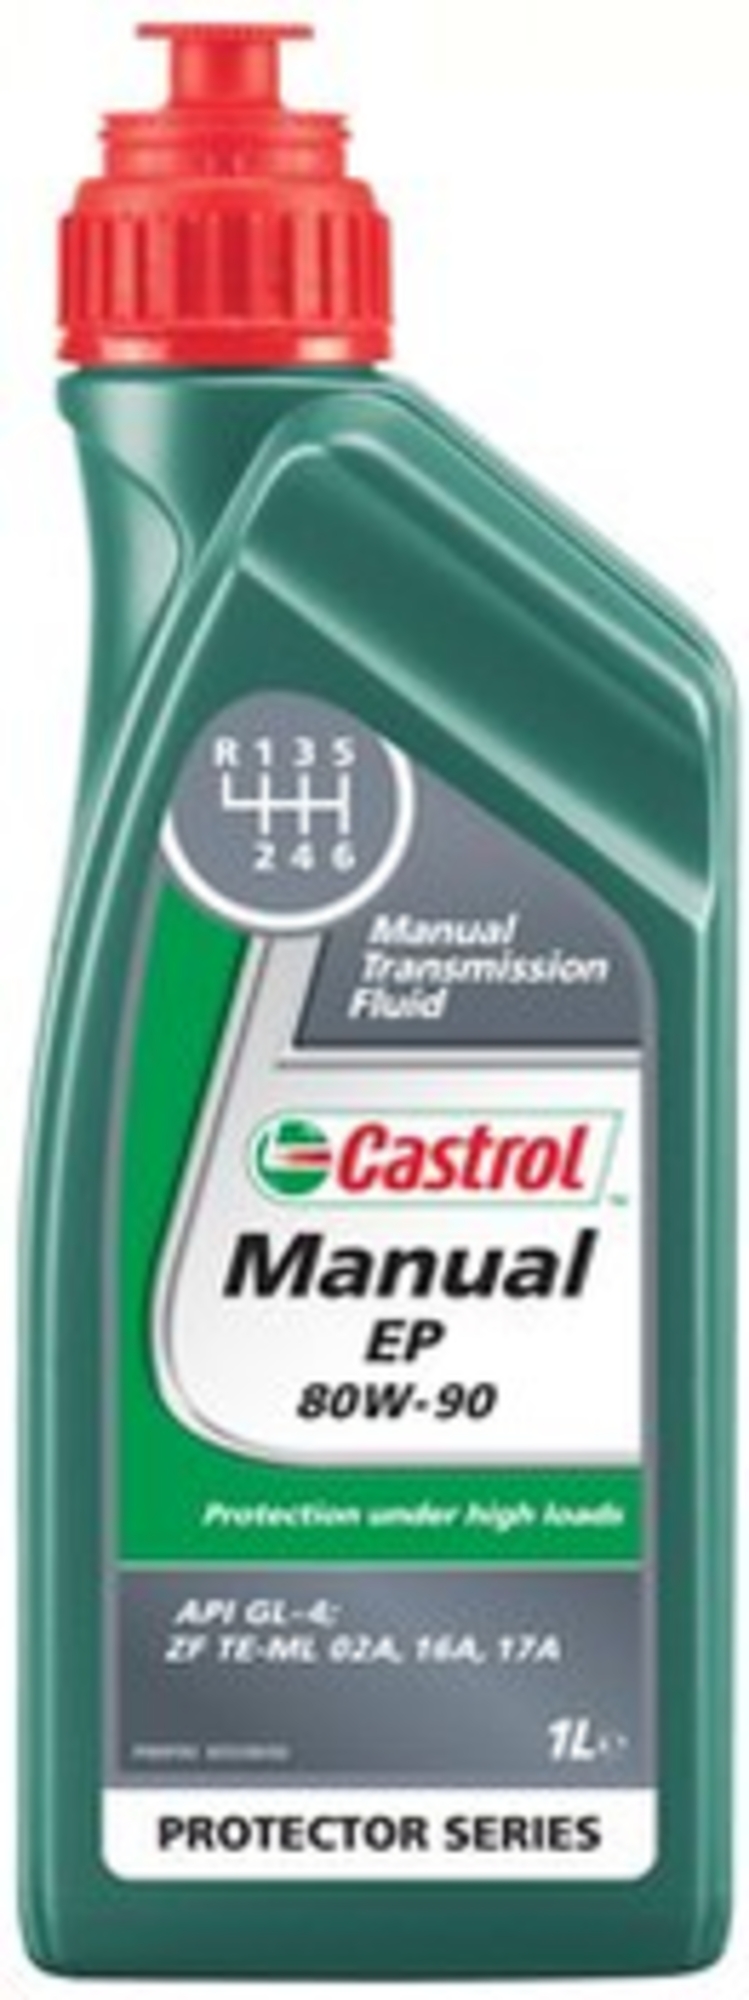 Castrol manual ep 80w-90 (1l)